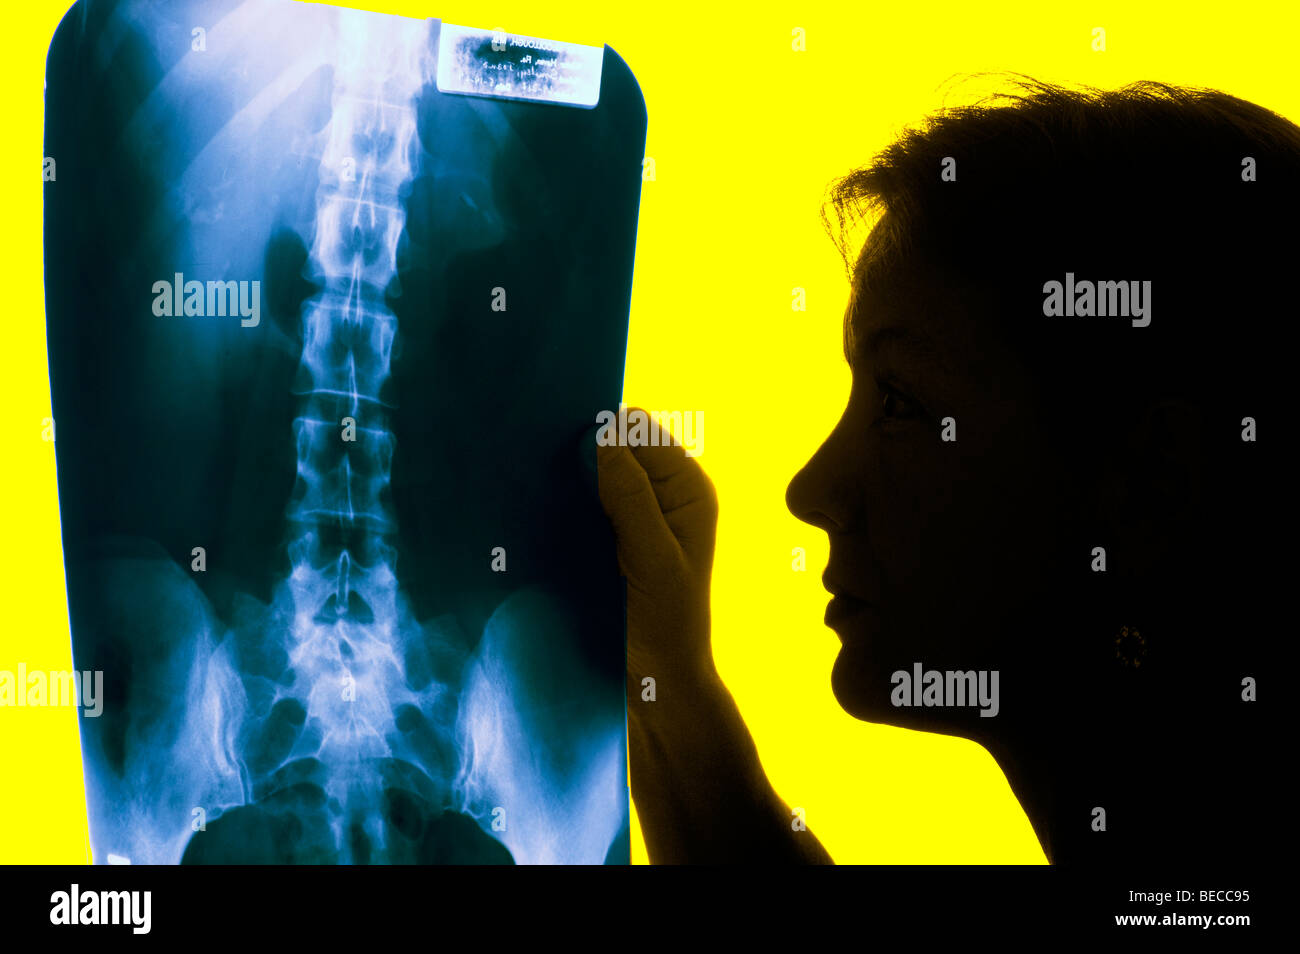 Frau x-ray Techniker prüfen Wirbelsäule Röntgen im Labor Stockfoto